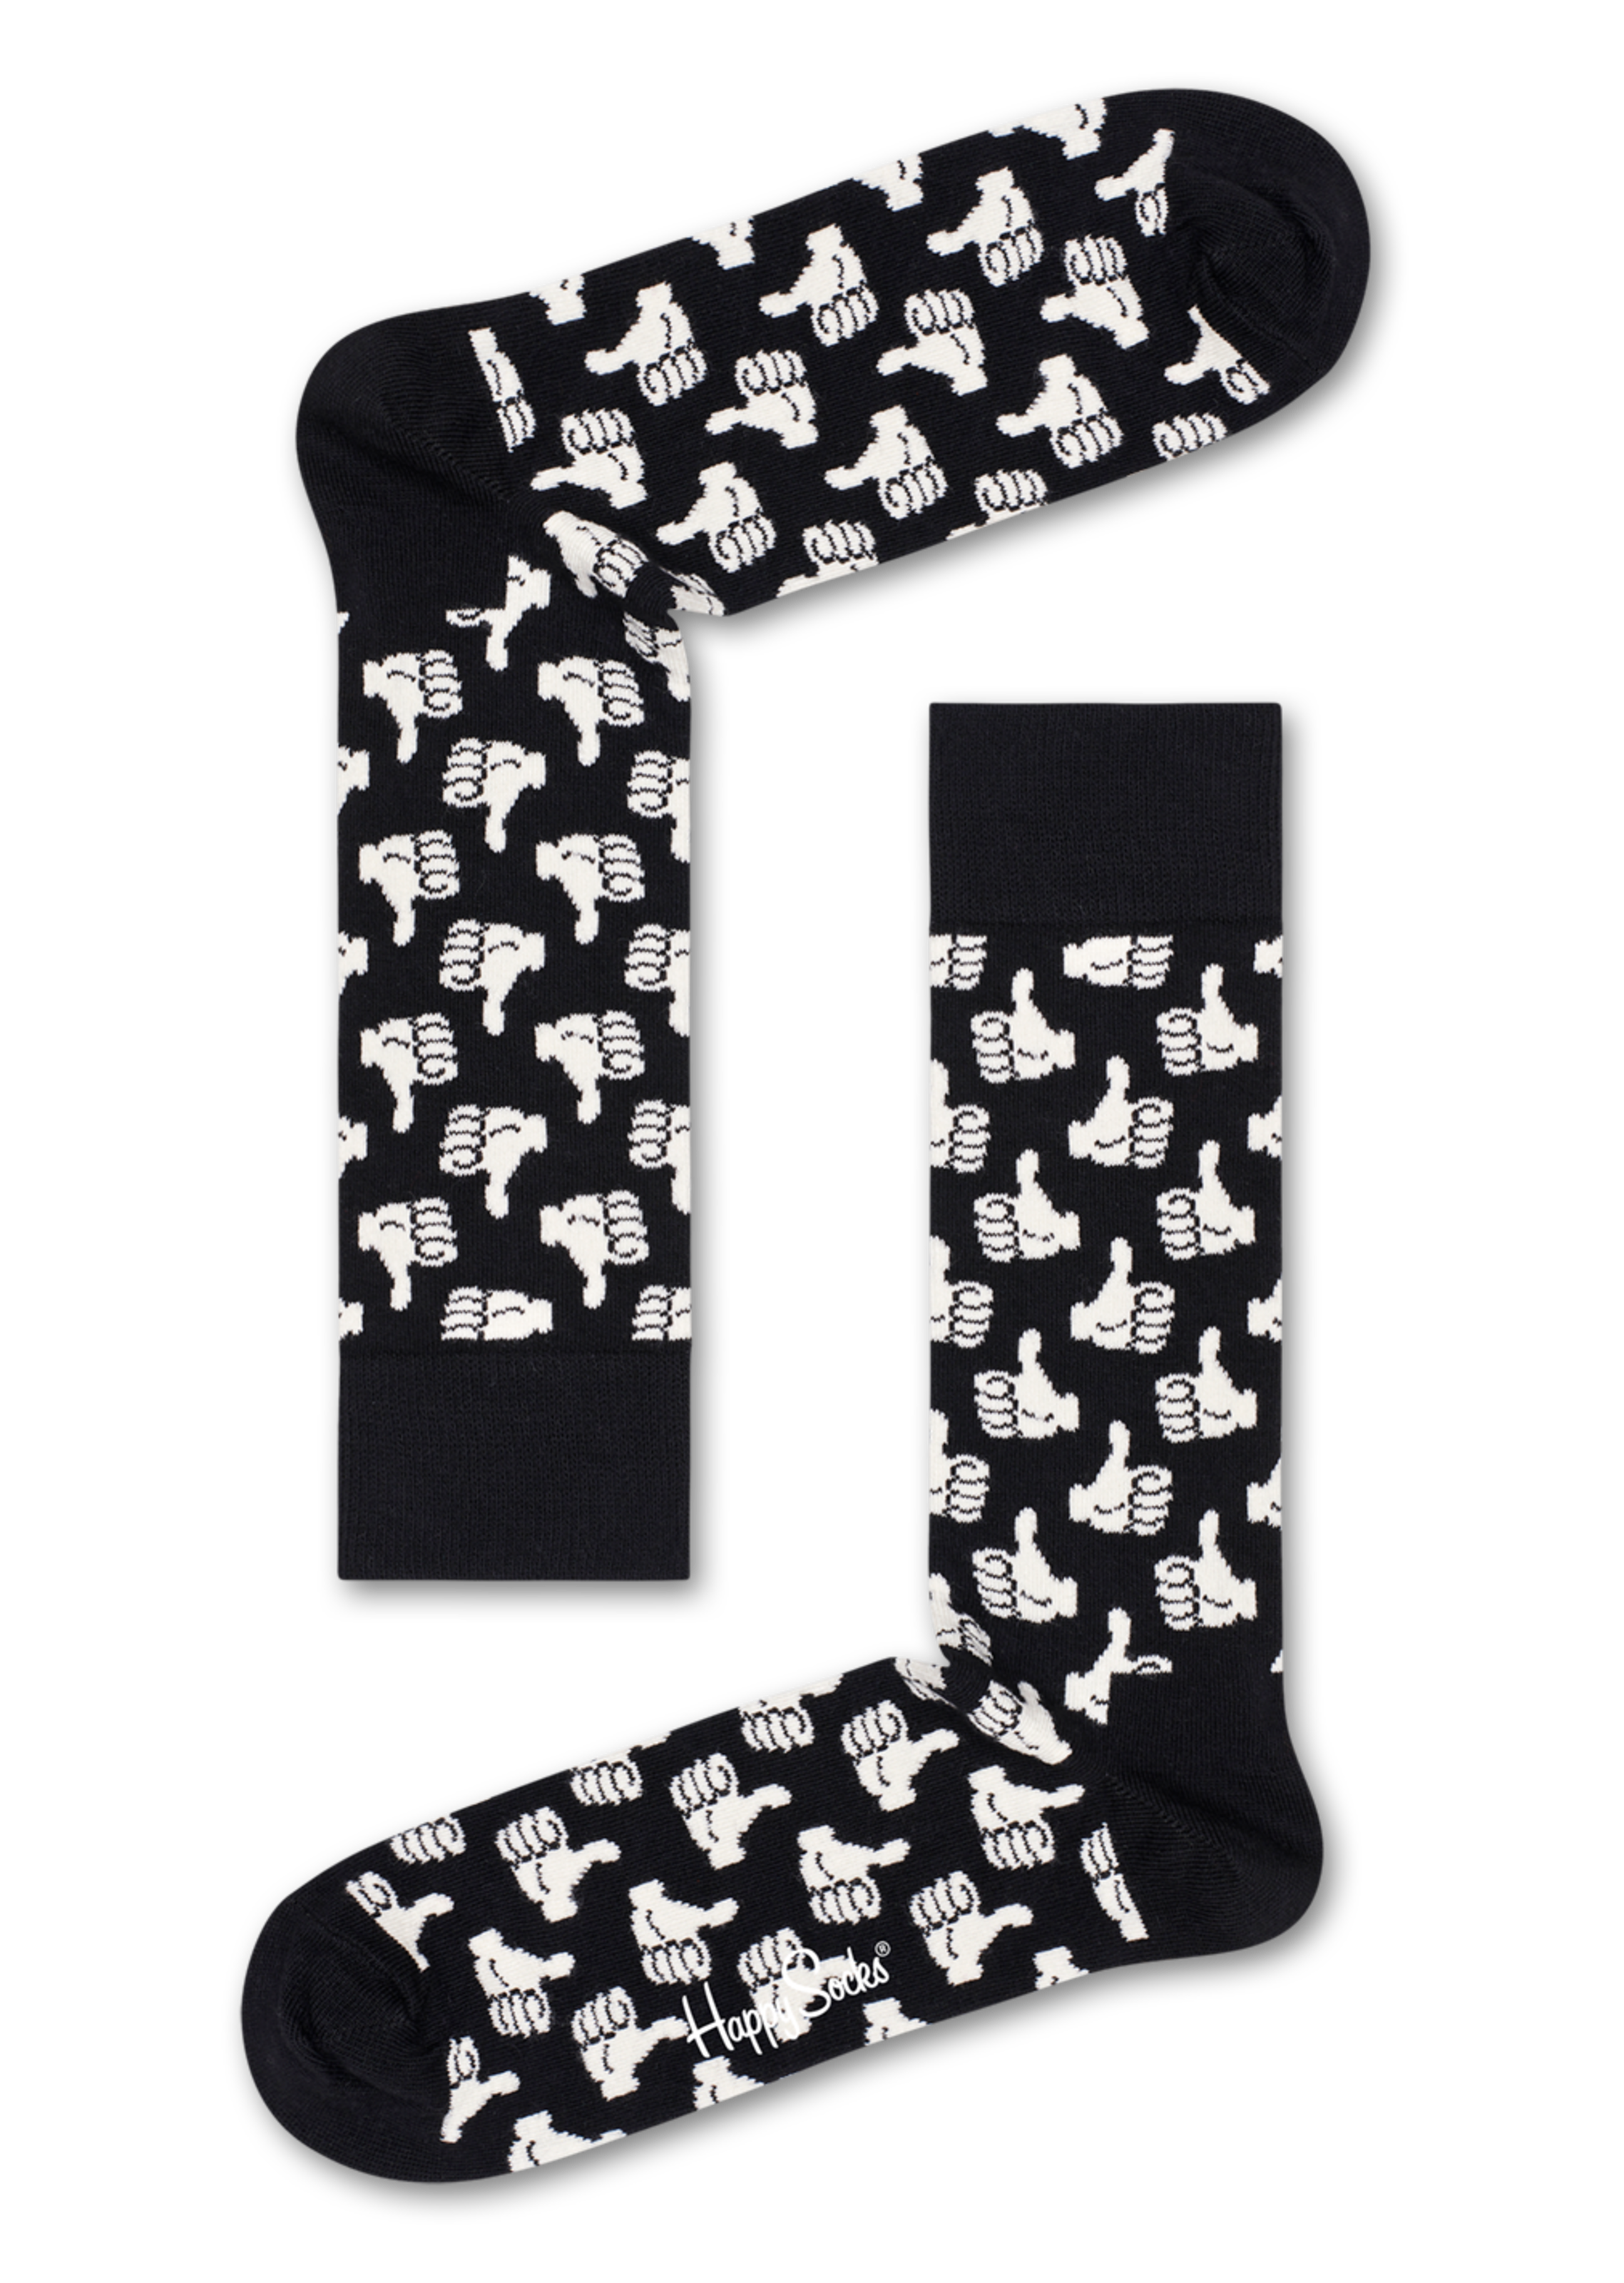 Socks Socks Box Black White Gift US | Happy And